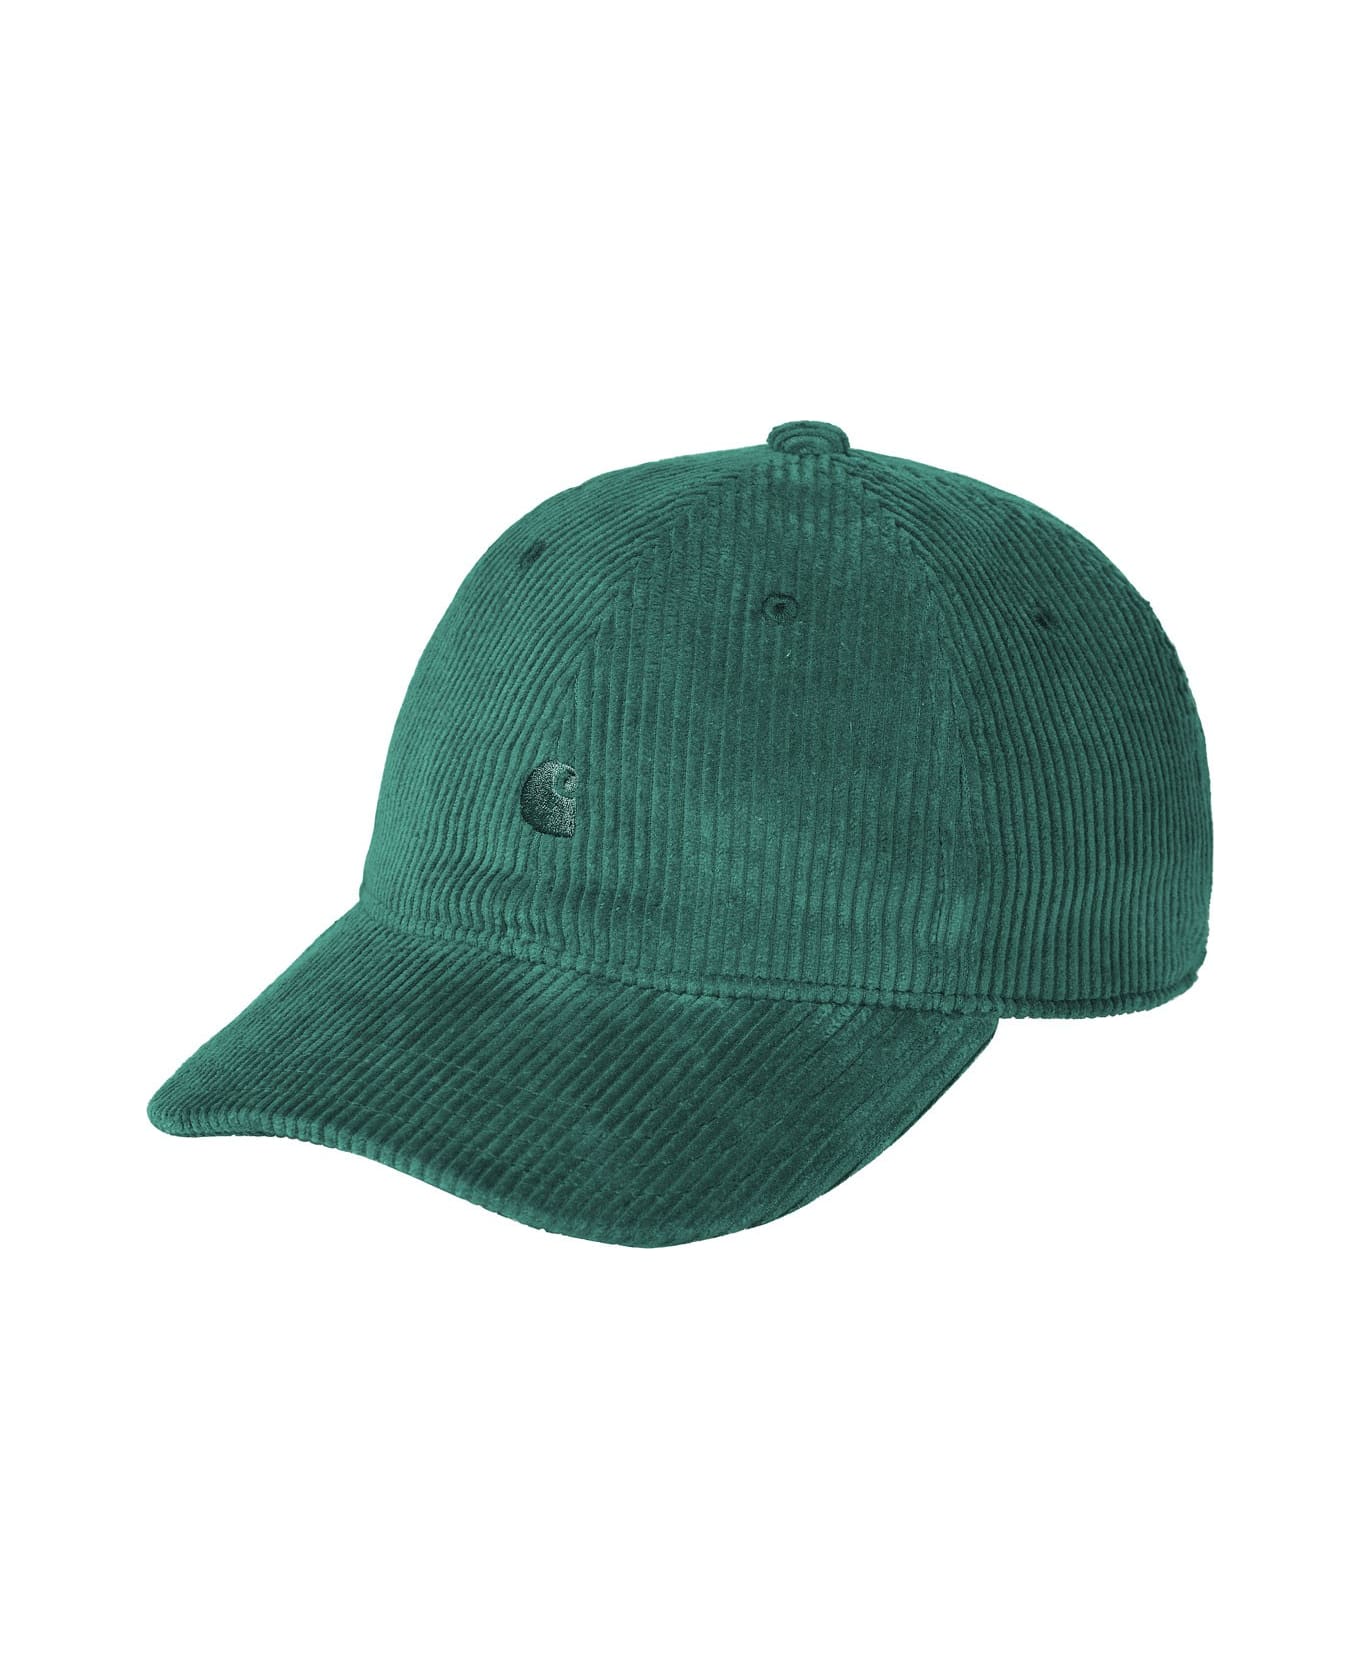 Carhartt Harlem Cap - Xhxx Chervil 帽子